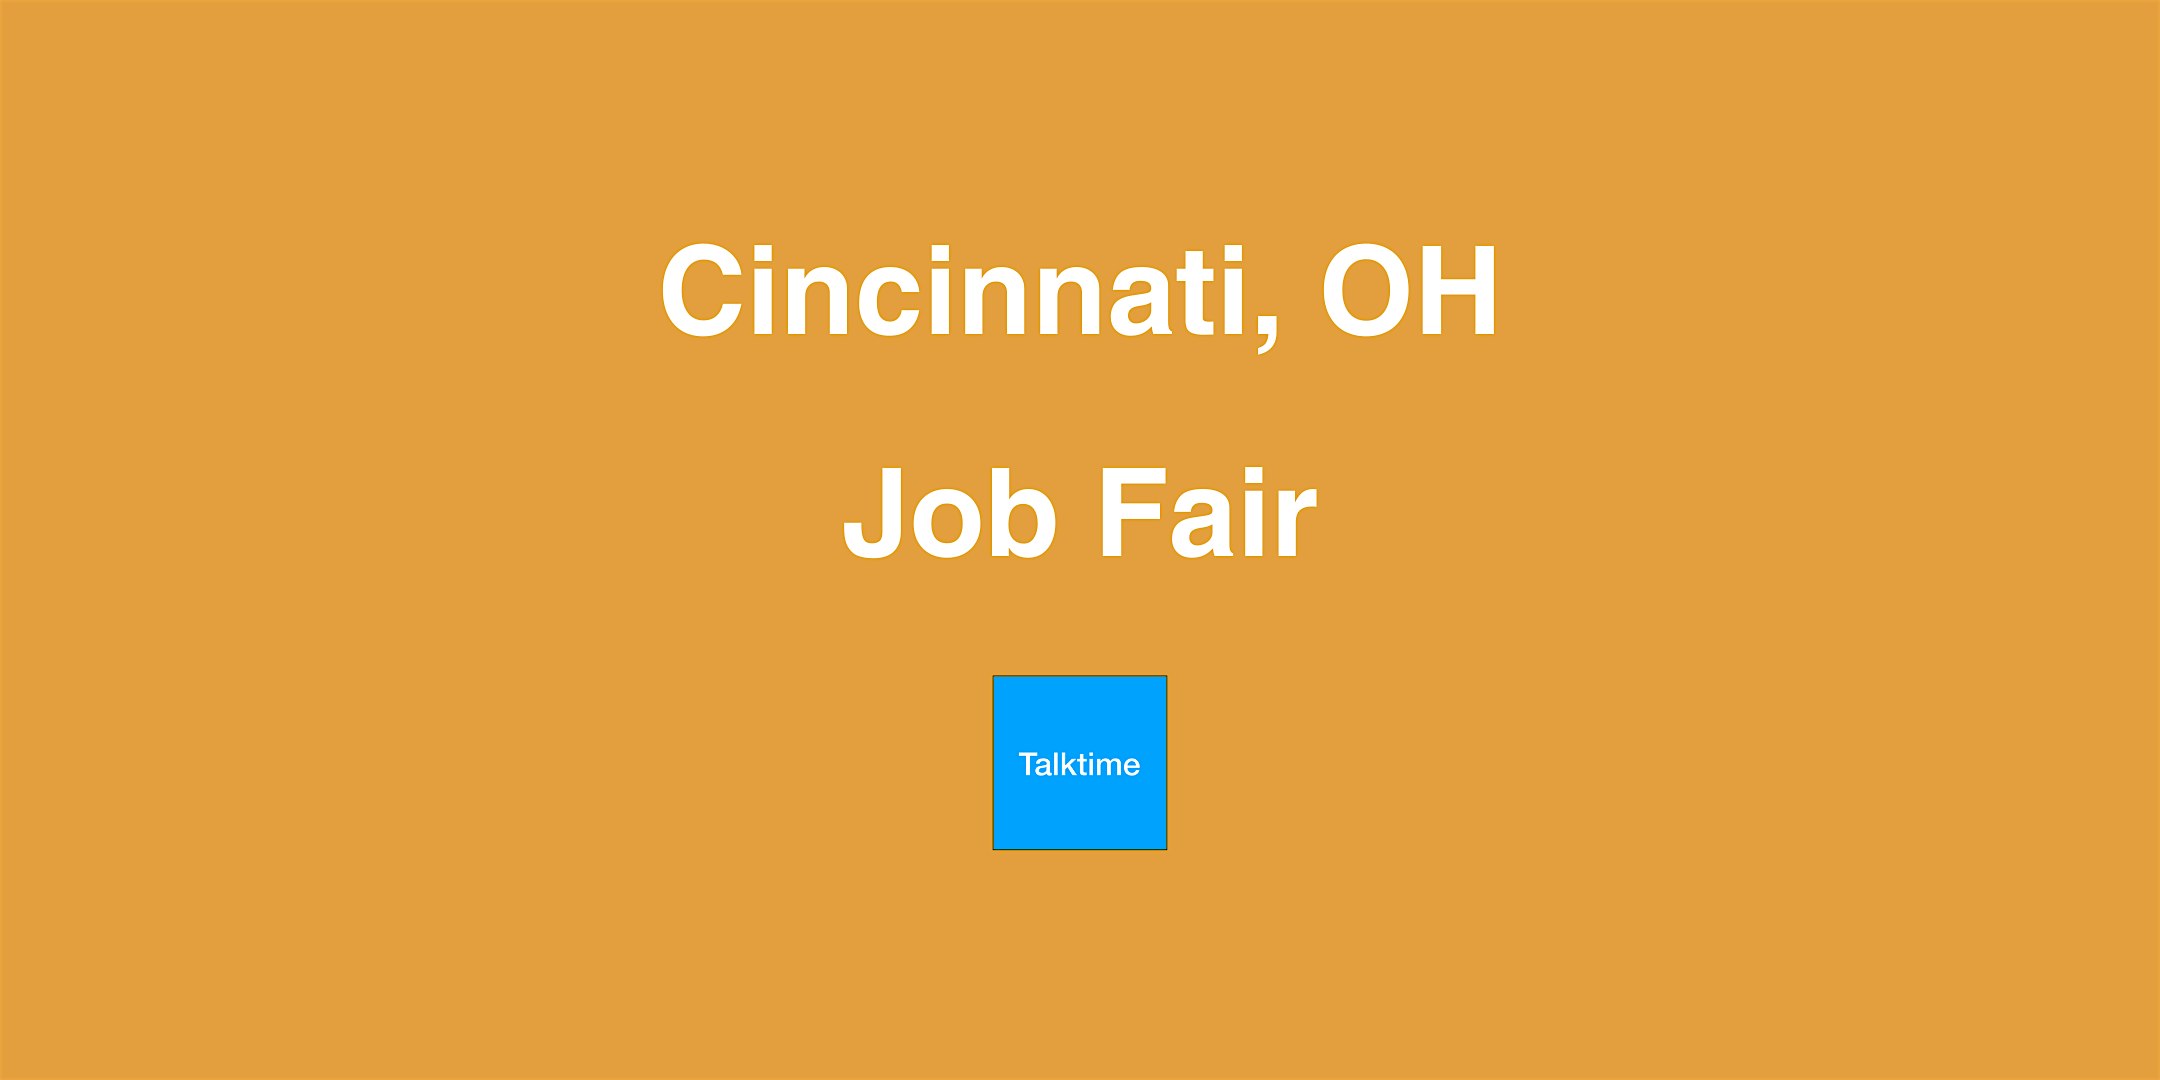 Job Fair - Cincinnati